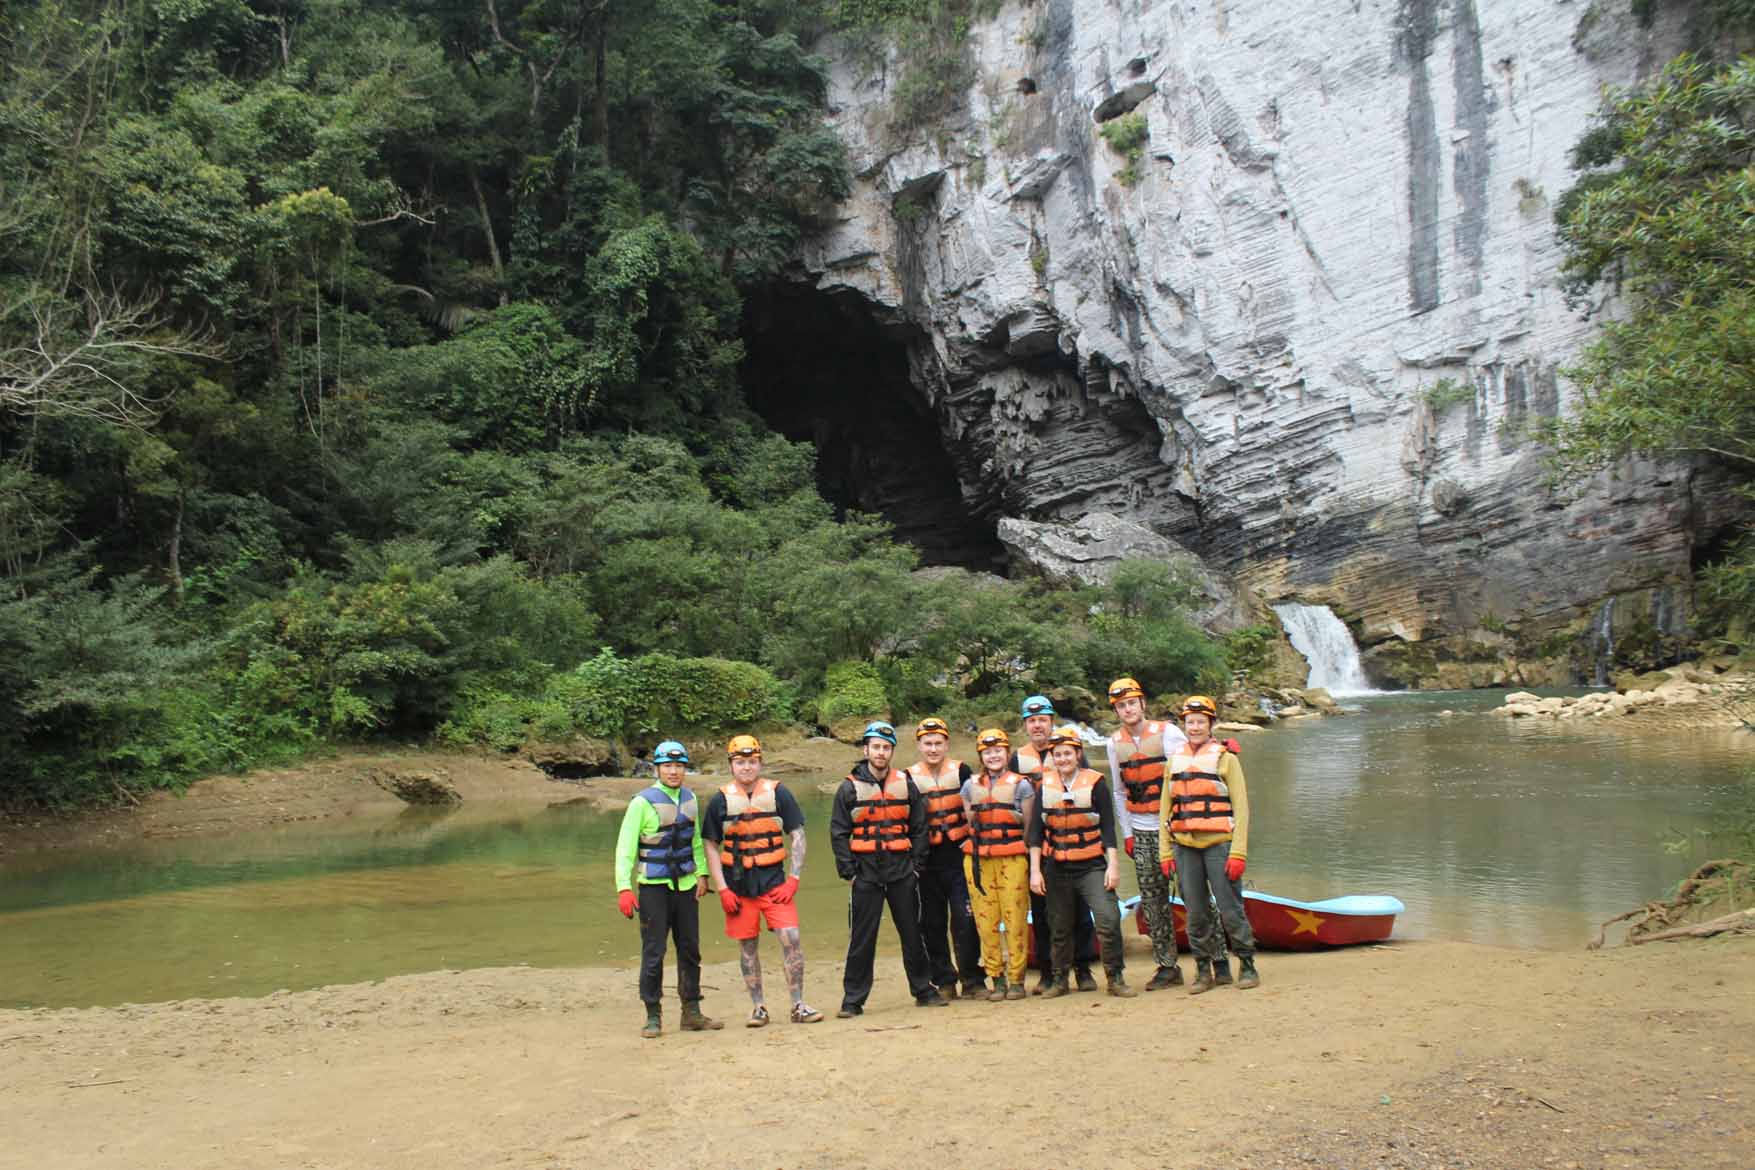 The Cloutmen cave trekking in Phong Nha